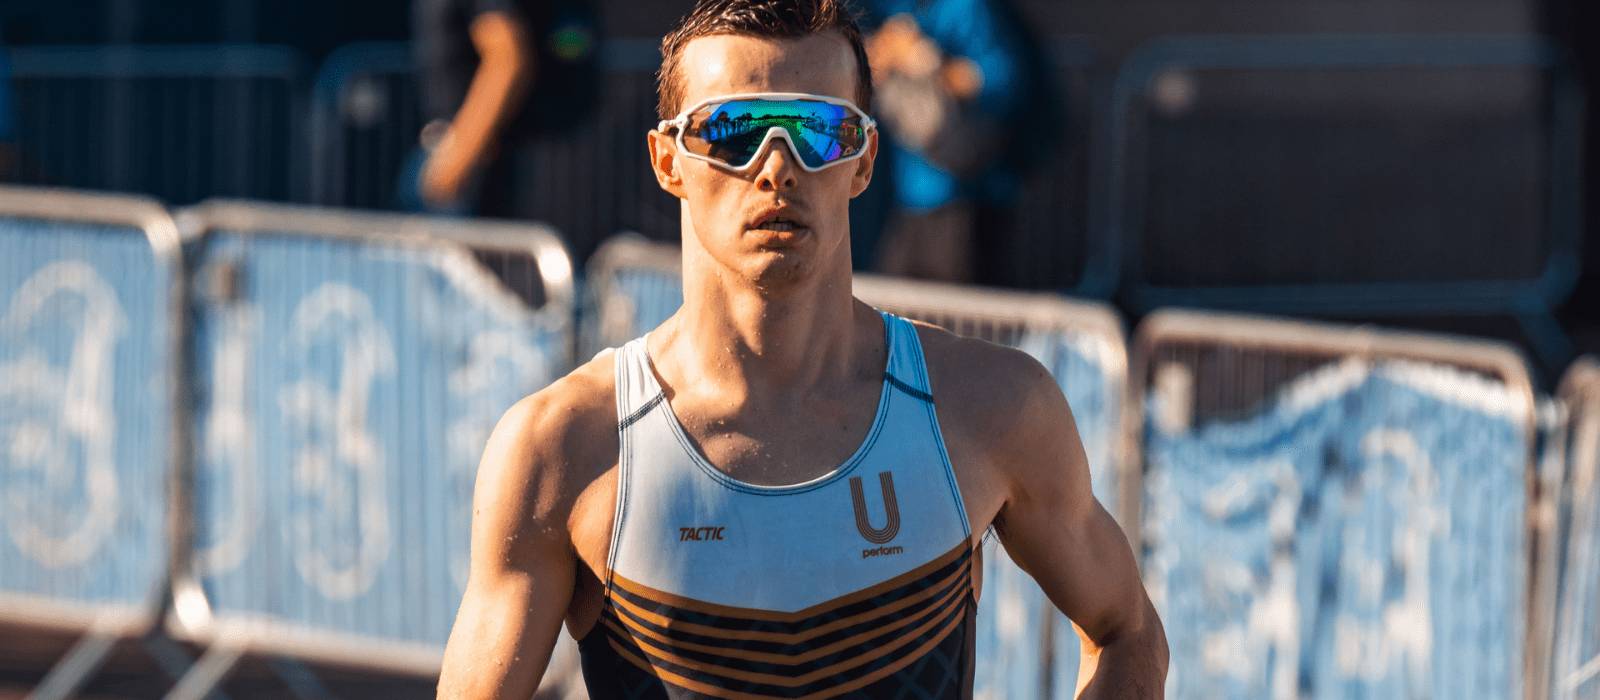 Man in triathlon clothing and sports sunglasses running - U Perform Triathlon